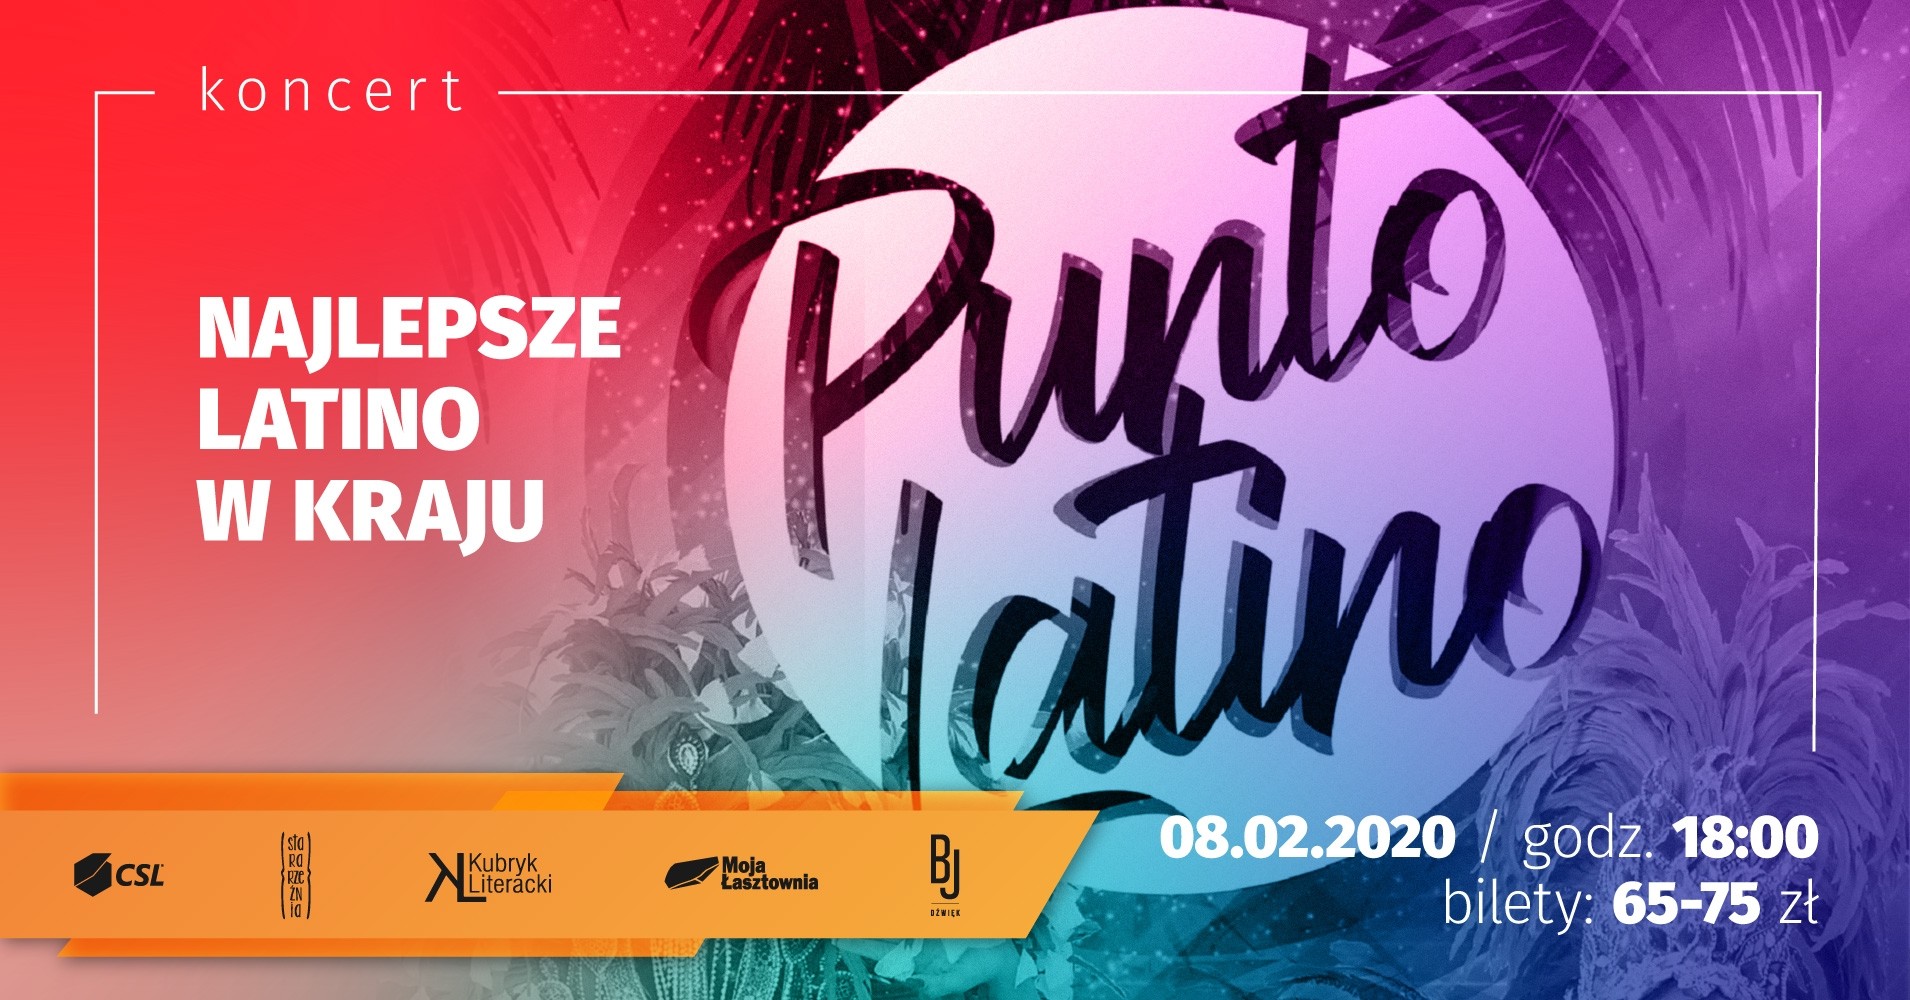 Tickets for Punto Latino in Szczecin